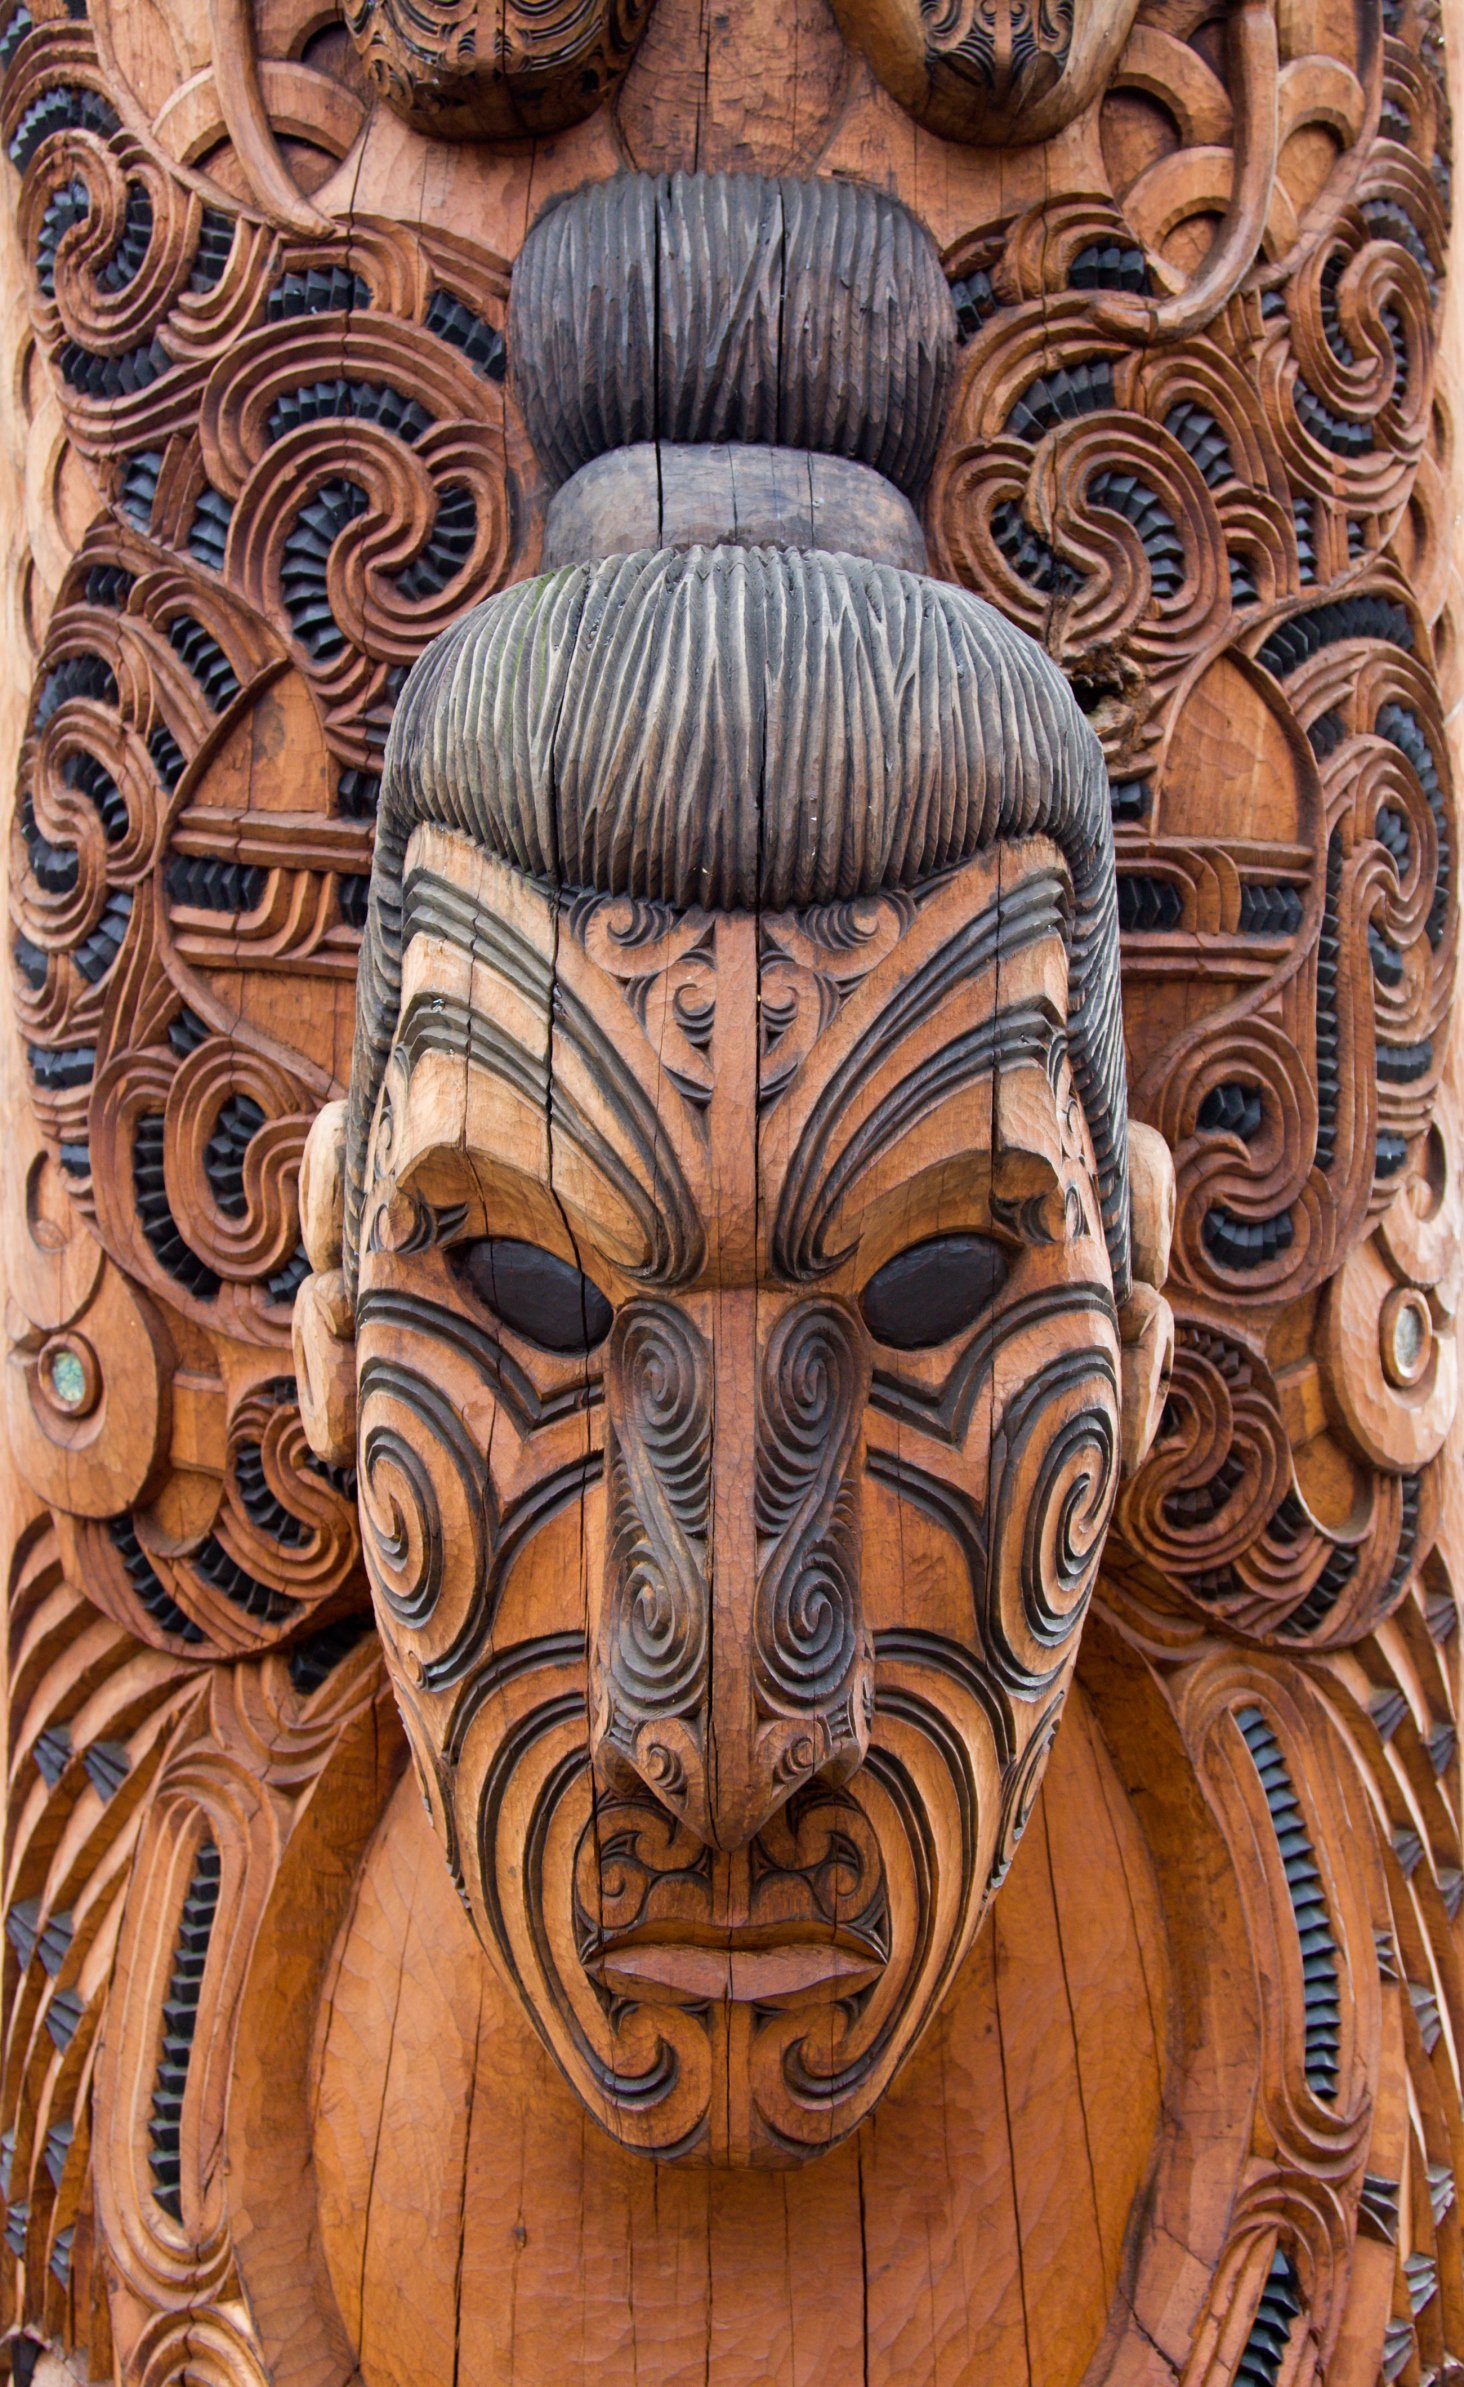 Ta moko: A rite of passage for any New Zealand locum tenens